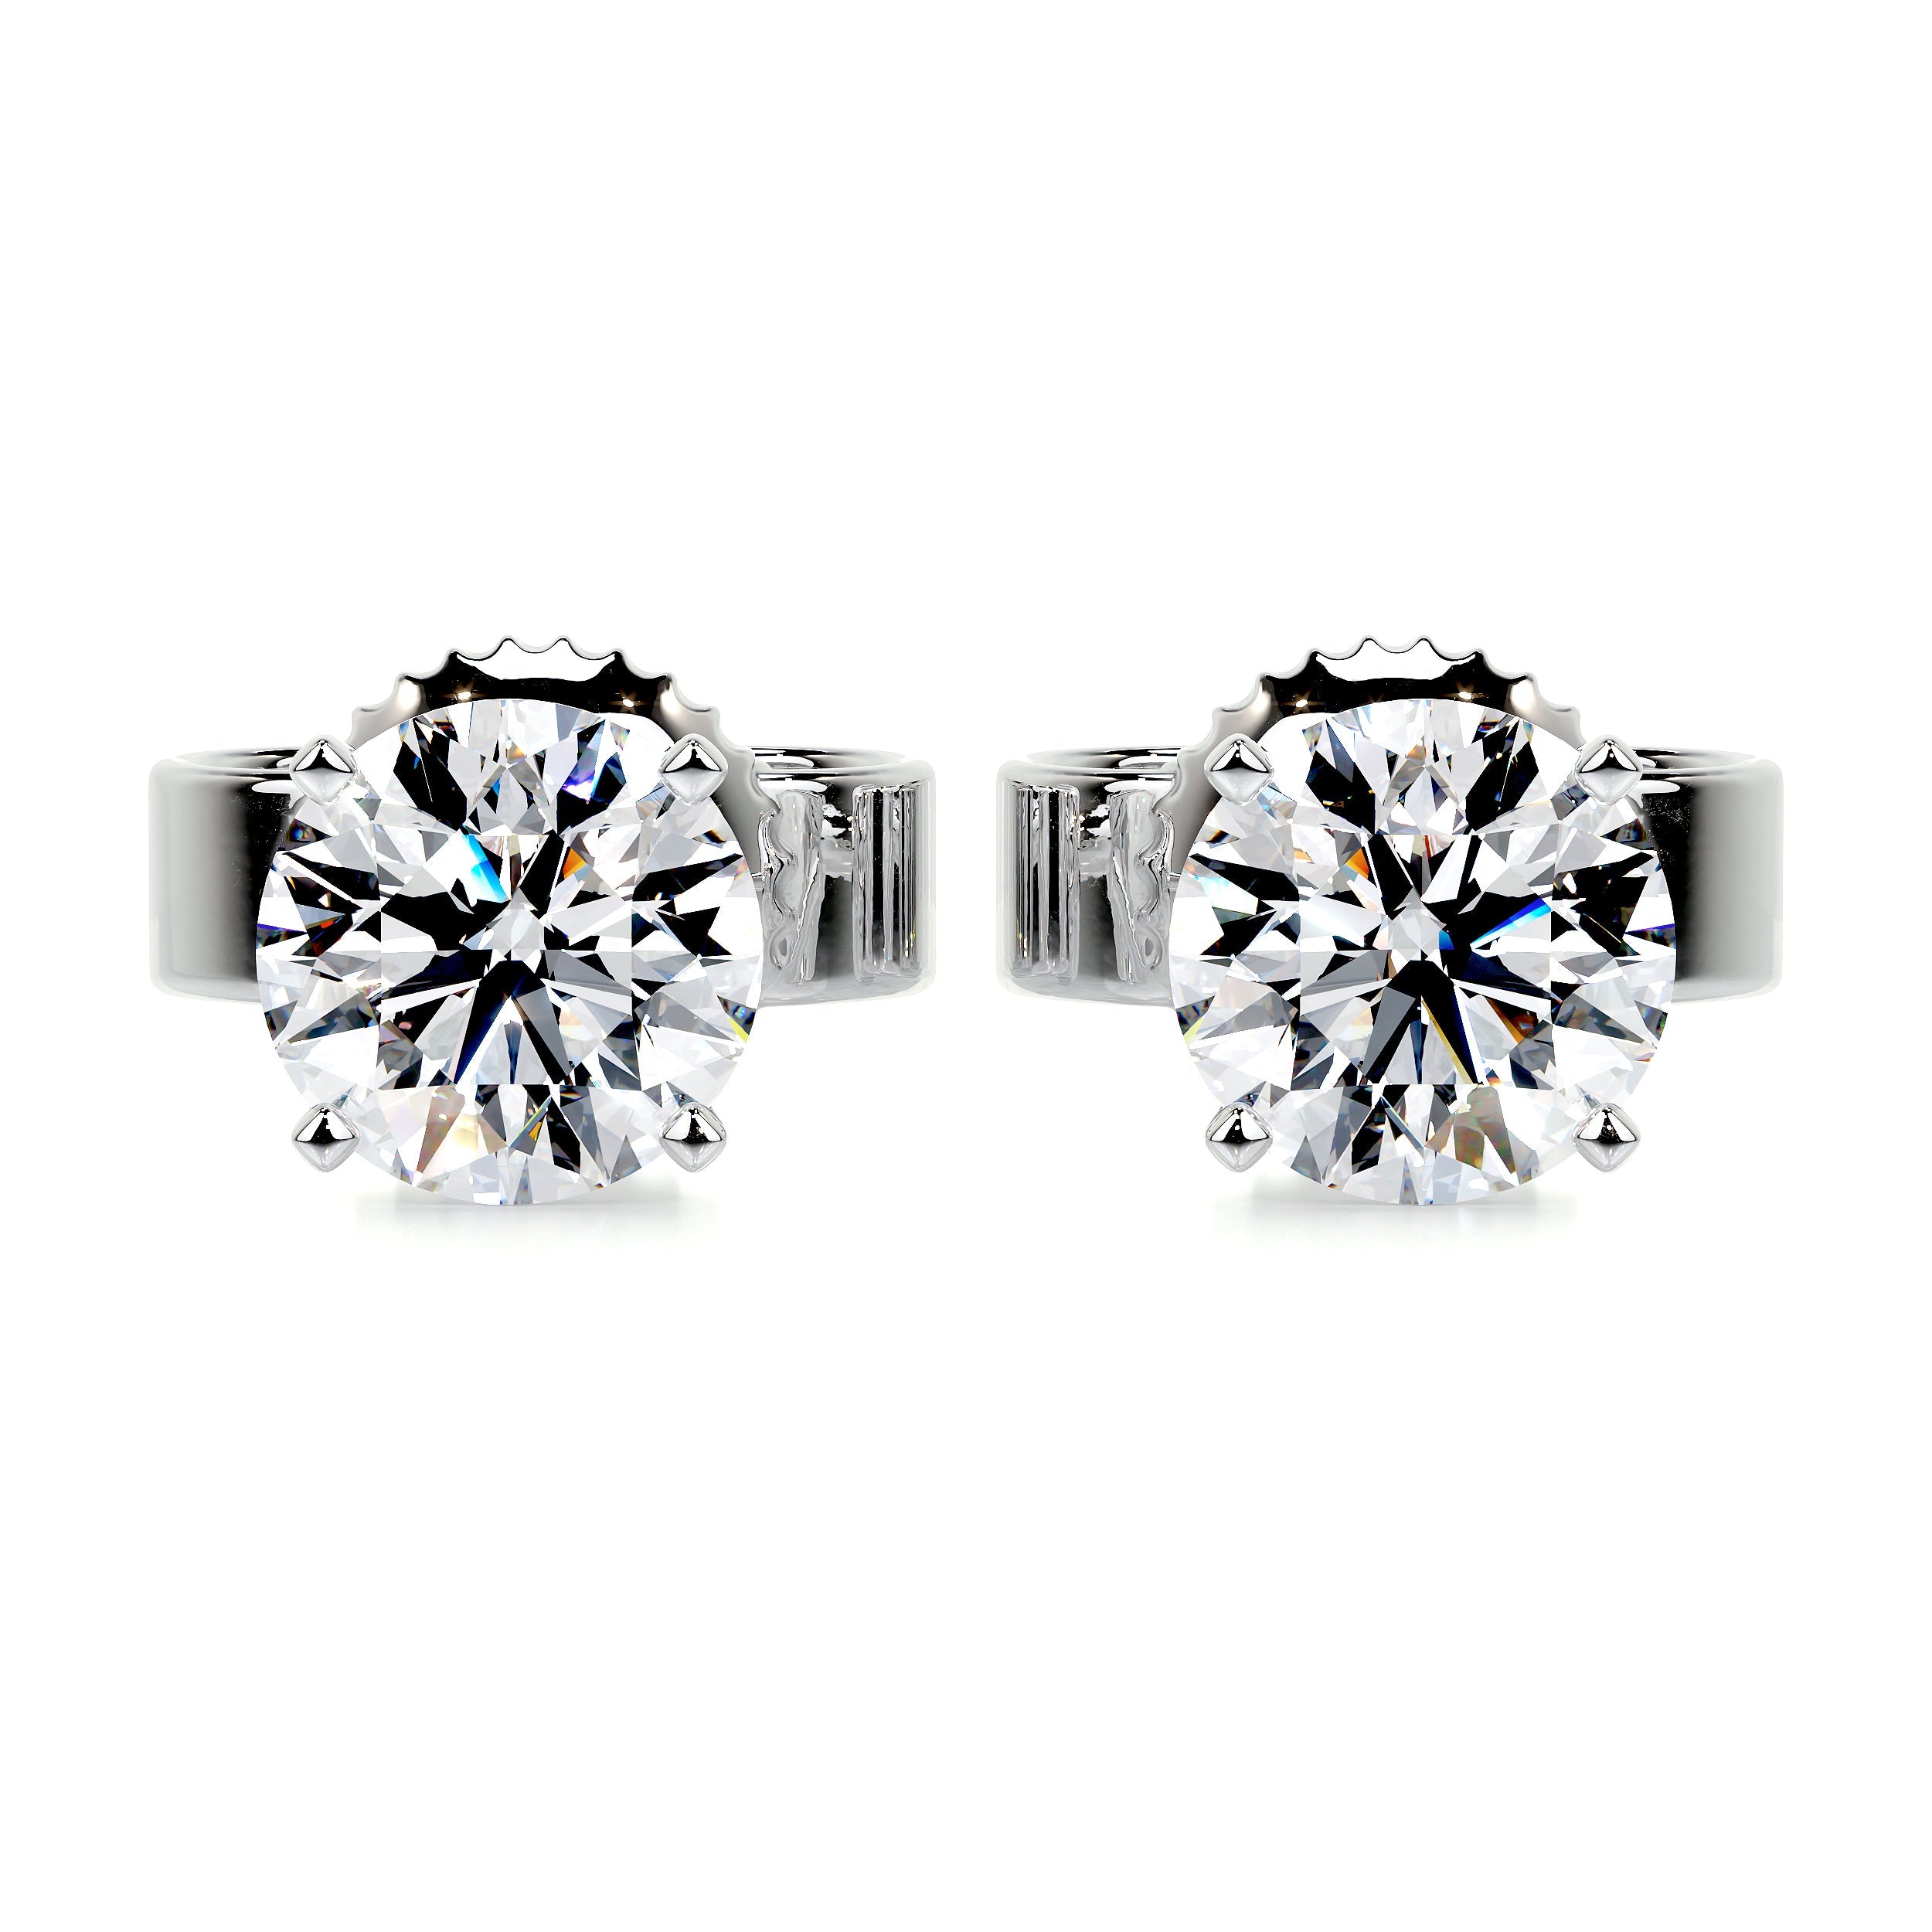 Allen Lab Grown Diamond Earrings   (3 Carat) -14K White Gold